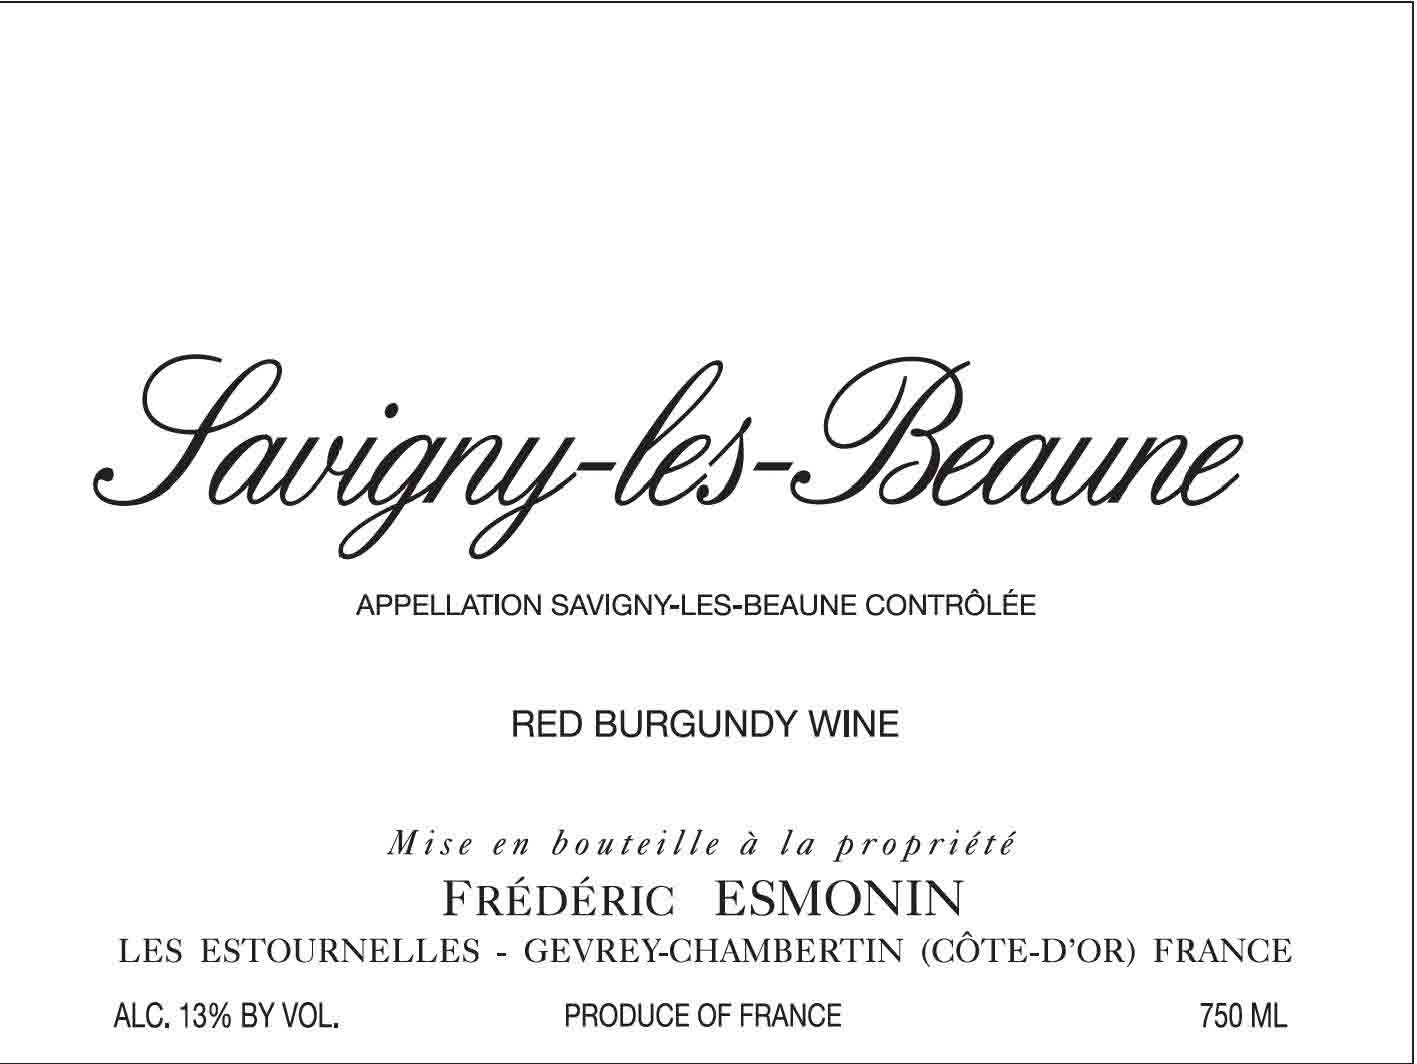 Frederic Esmonin - Savigny les Beaune label